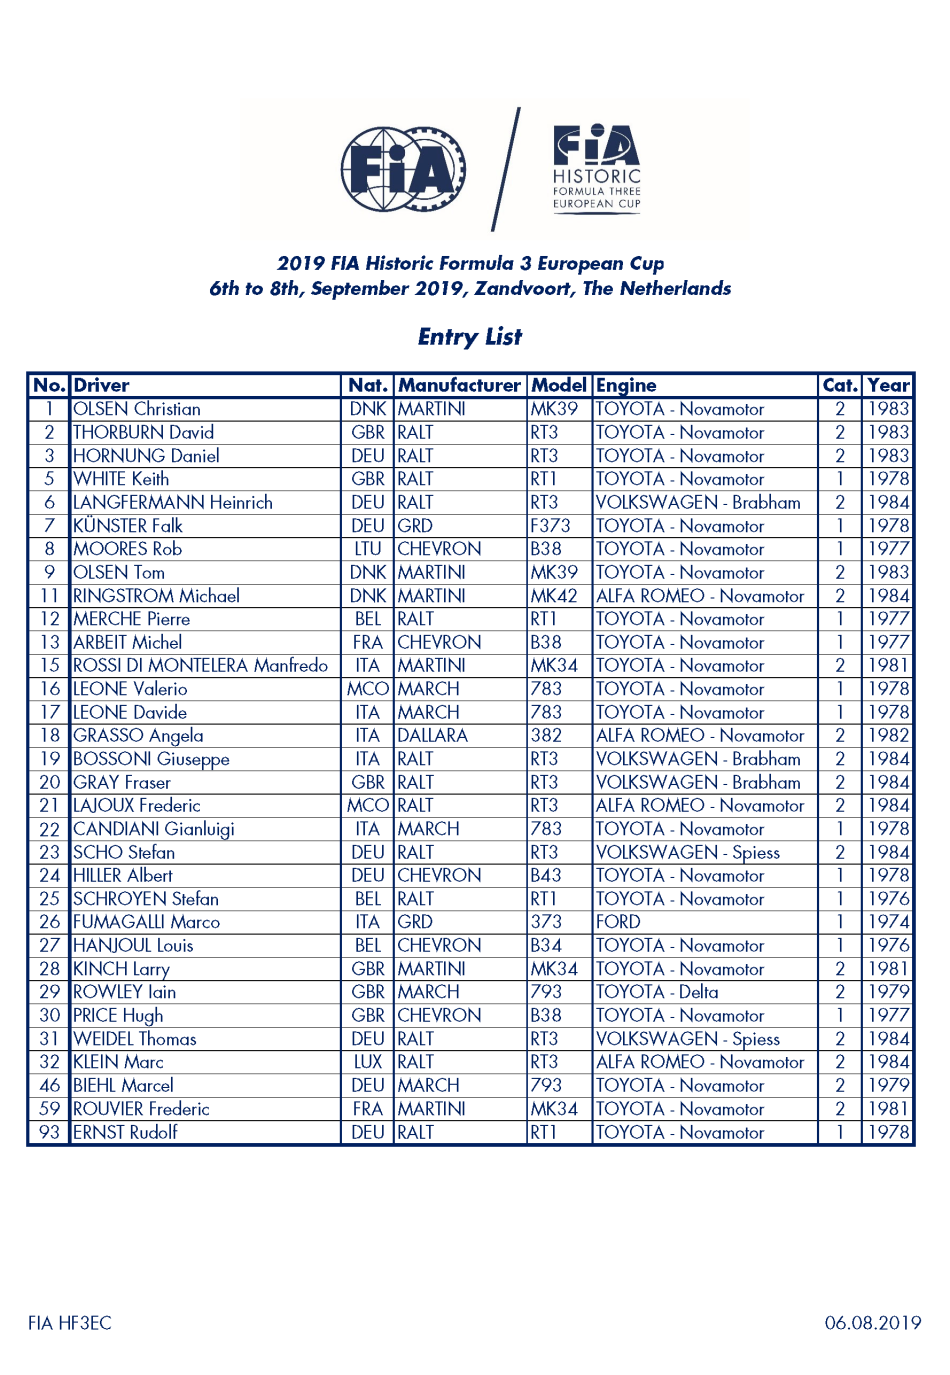 FIA Historic Formula 3 European Cup - Entry List - 06.08.2019